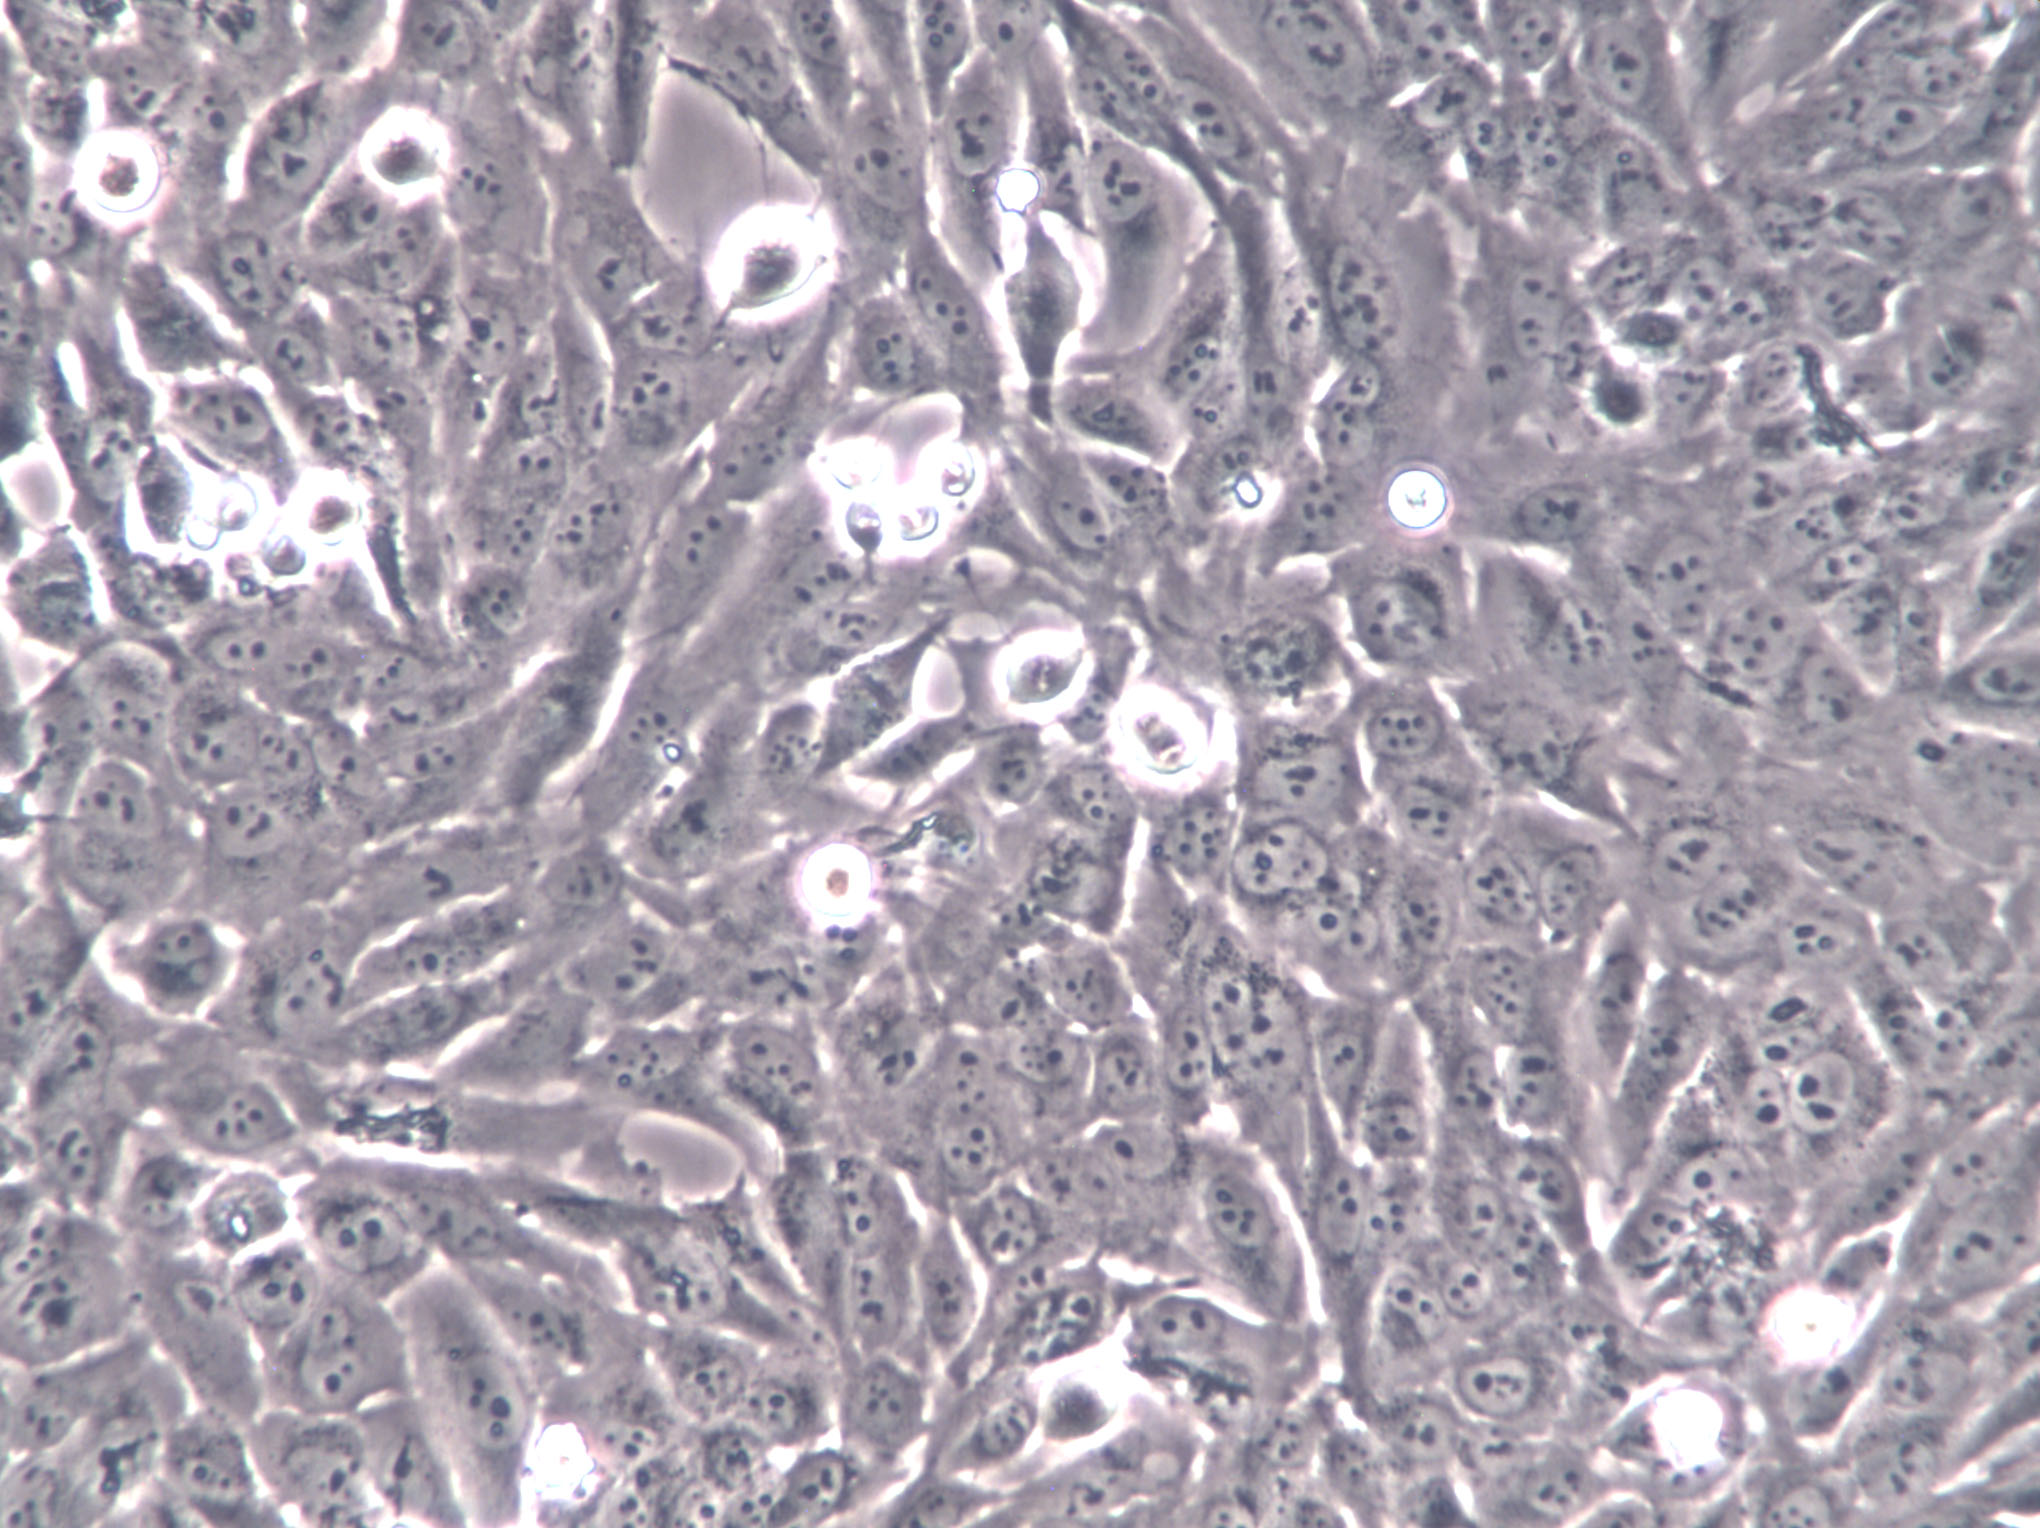 HSC-5 [Human skin squamous cell carcinoma] Cells(赠送Str鉴定报告)|人皮肤鳞癌细胞,HSC-5 [Human skin squamous cell carcinoma] Cells